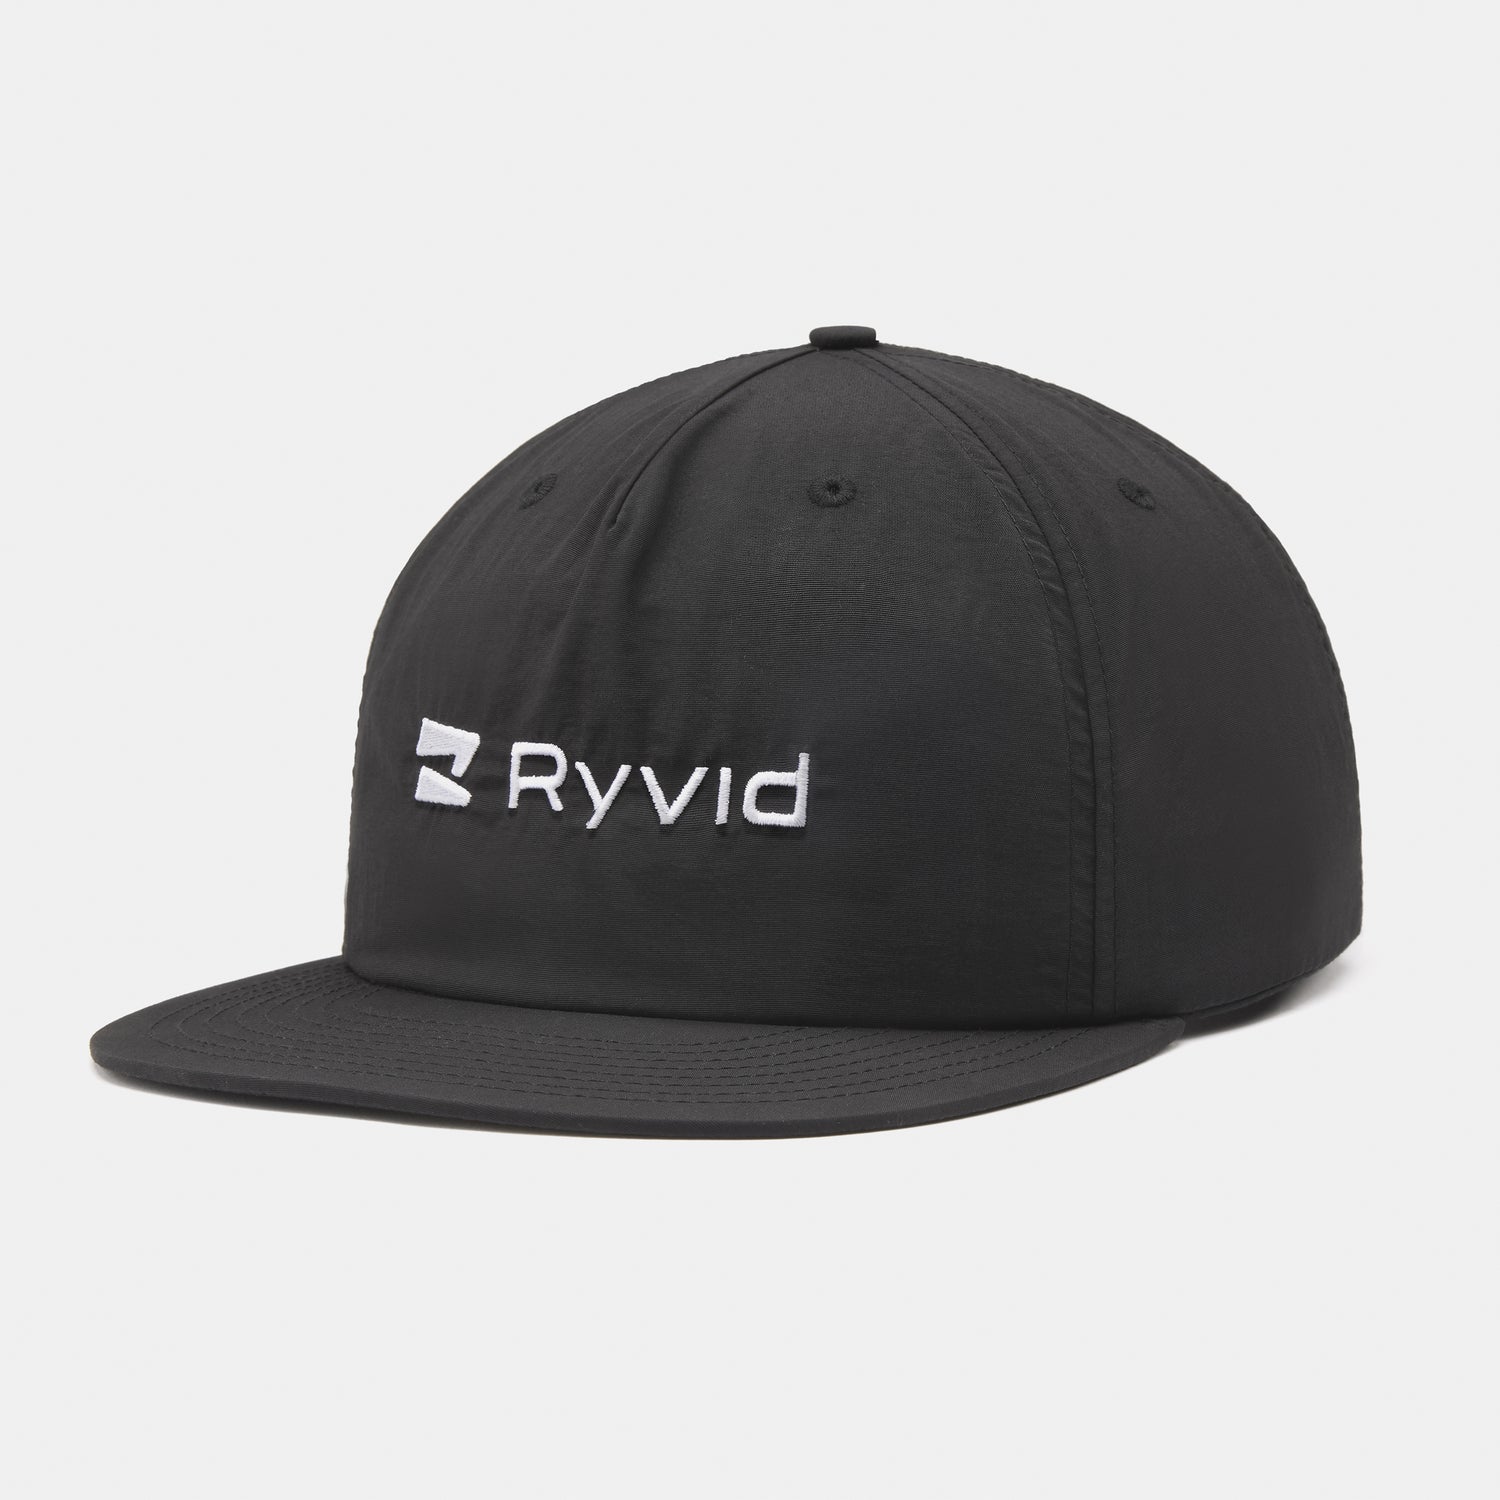 Ryvid Surf Hat